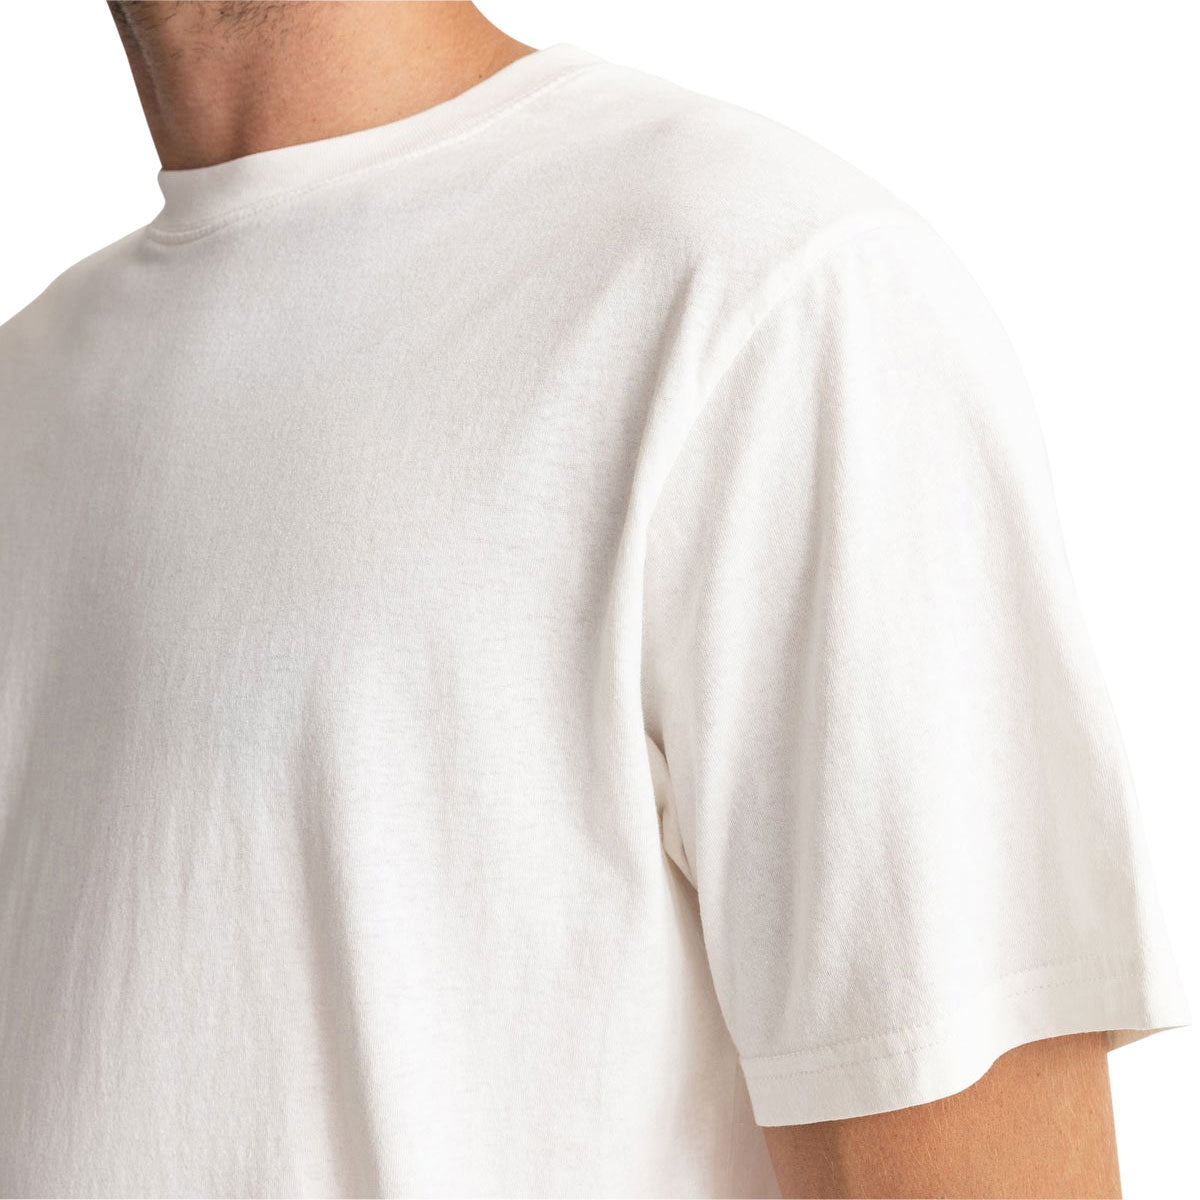 Rhythm Classic Brand T-Shirt - Vintage White image 4